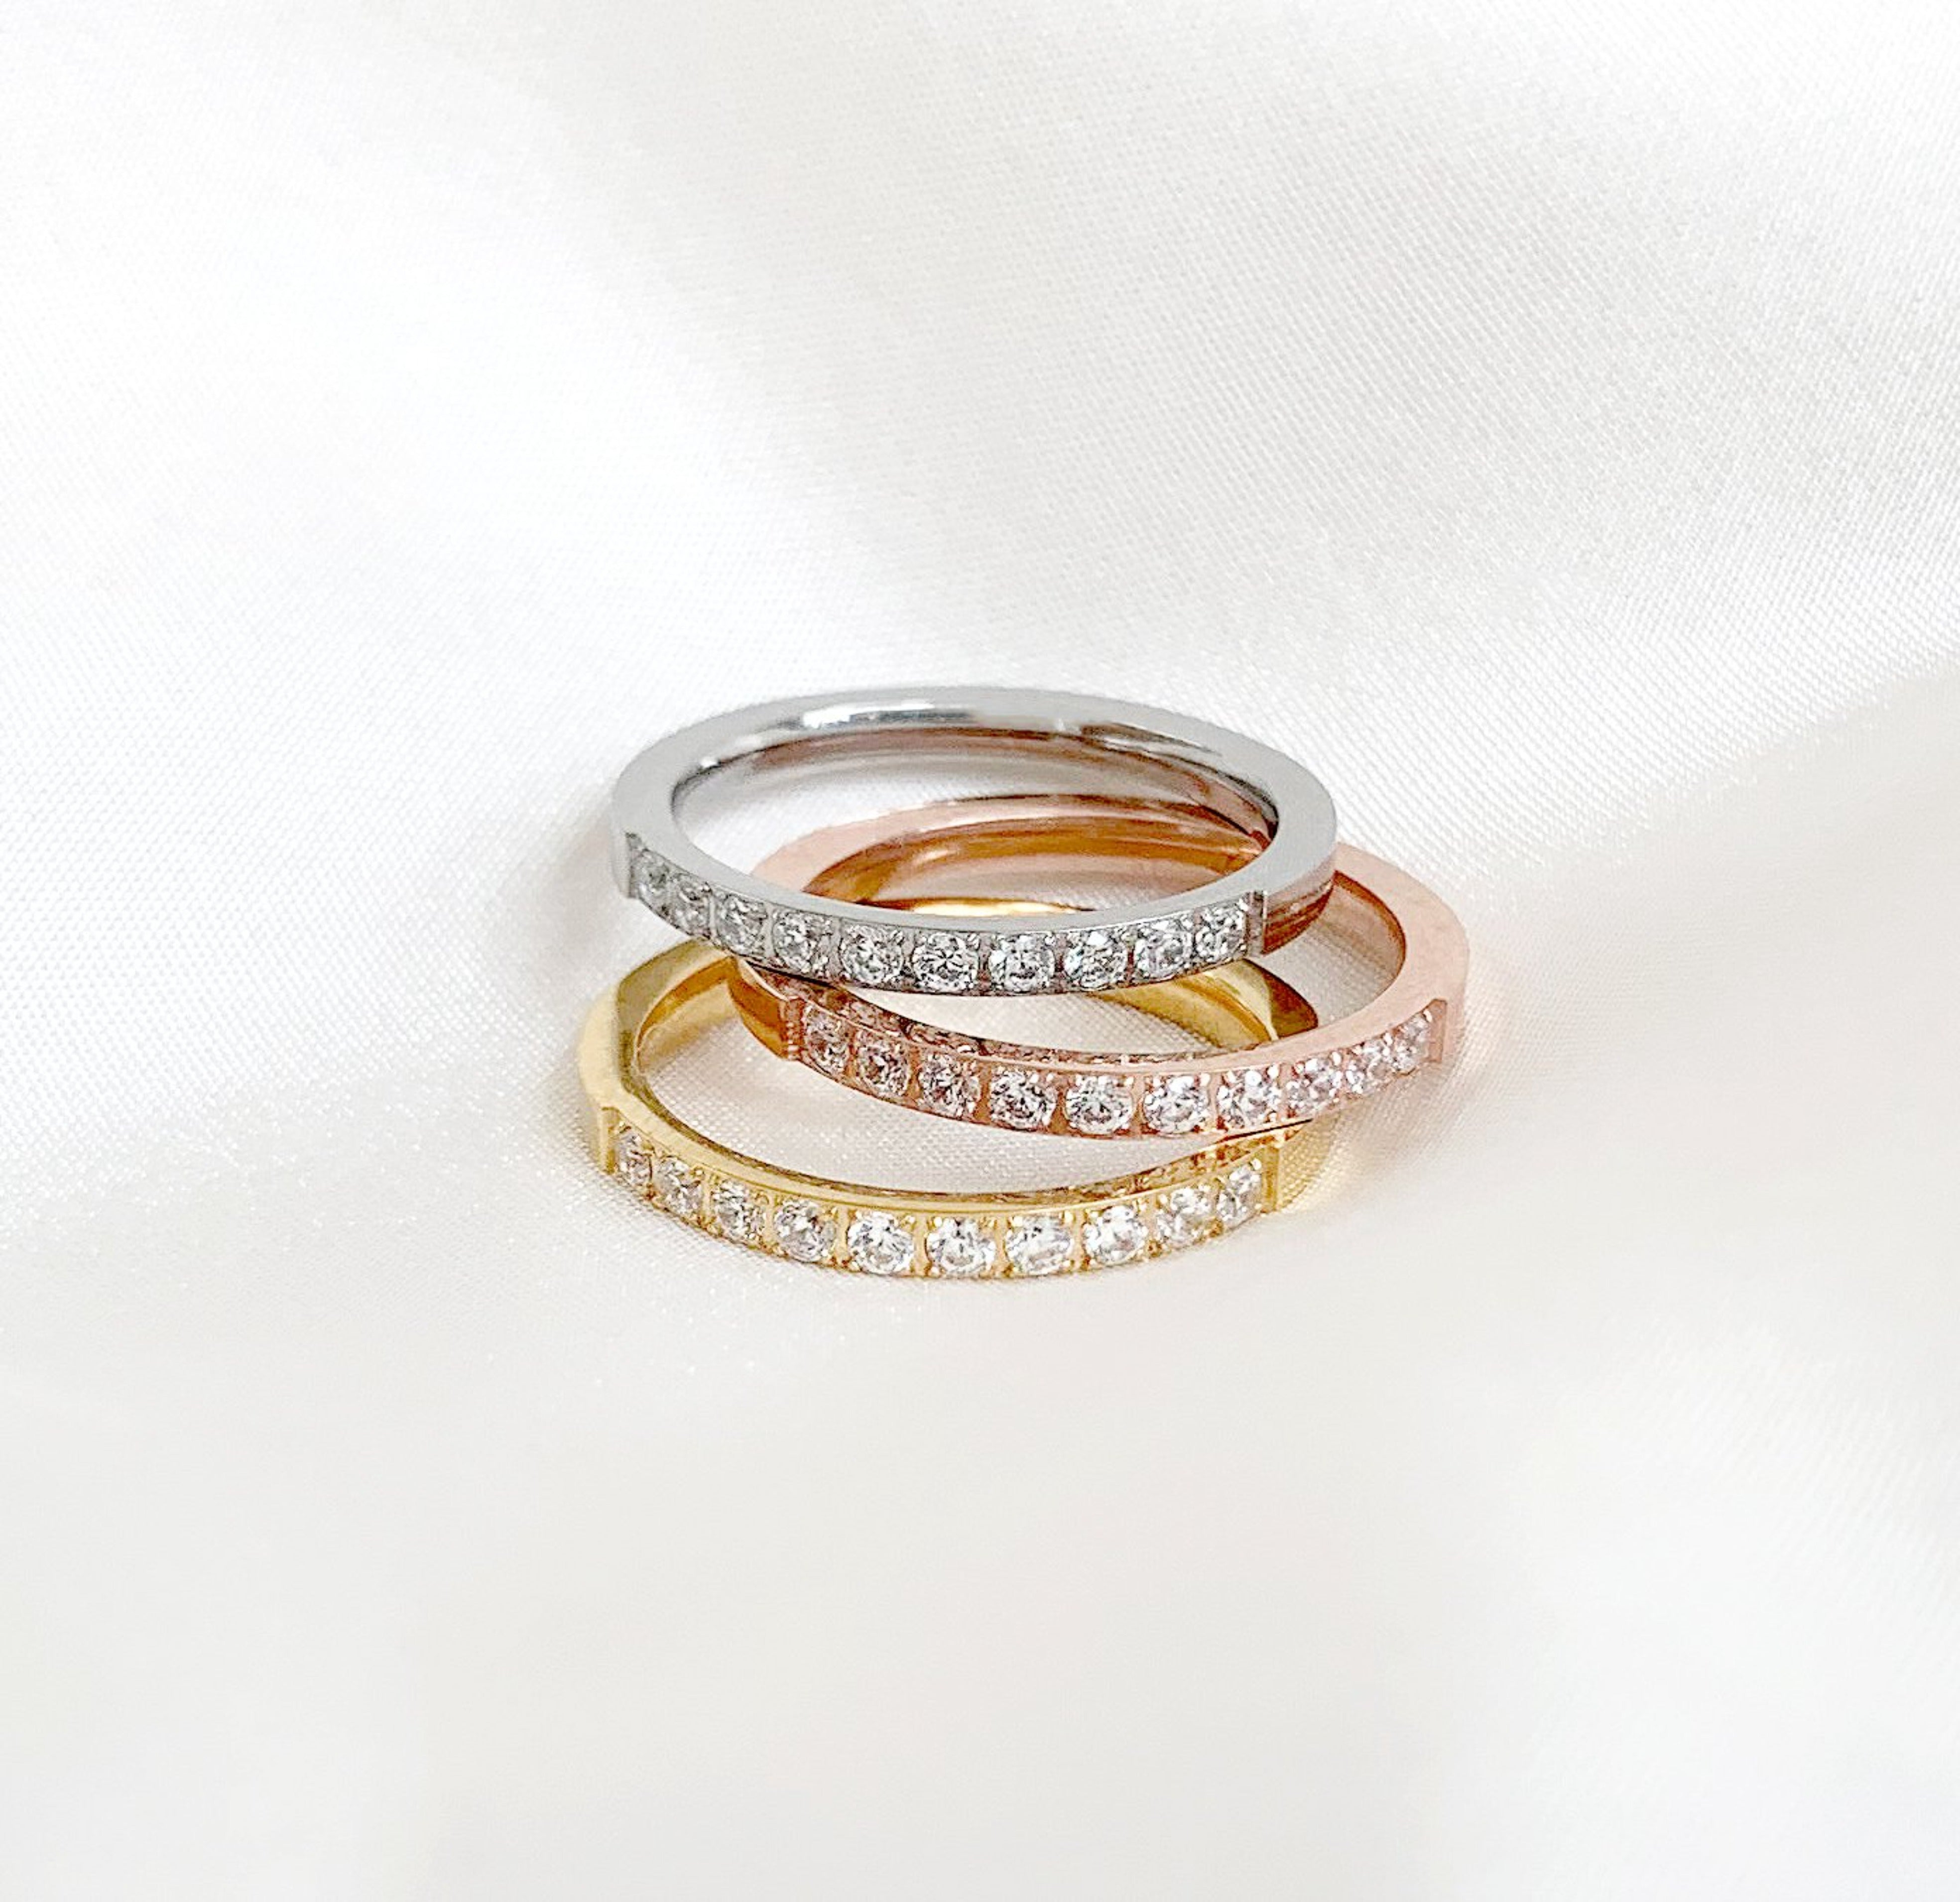 Stella rose gold half eternity ring band waterproof jewelry